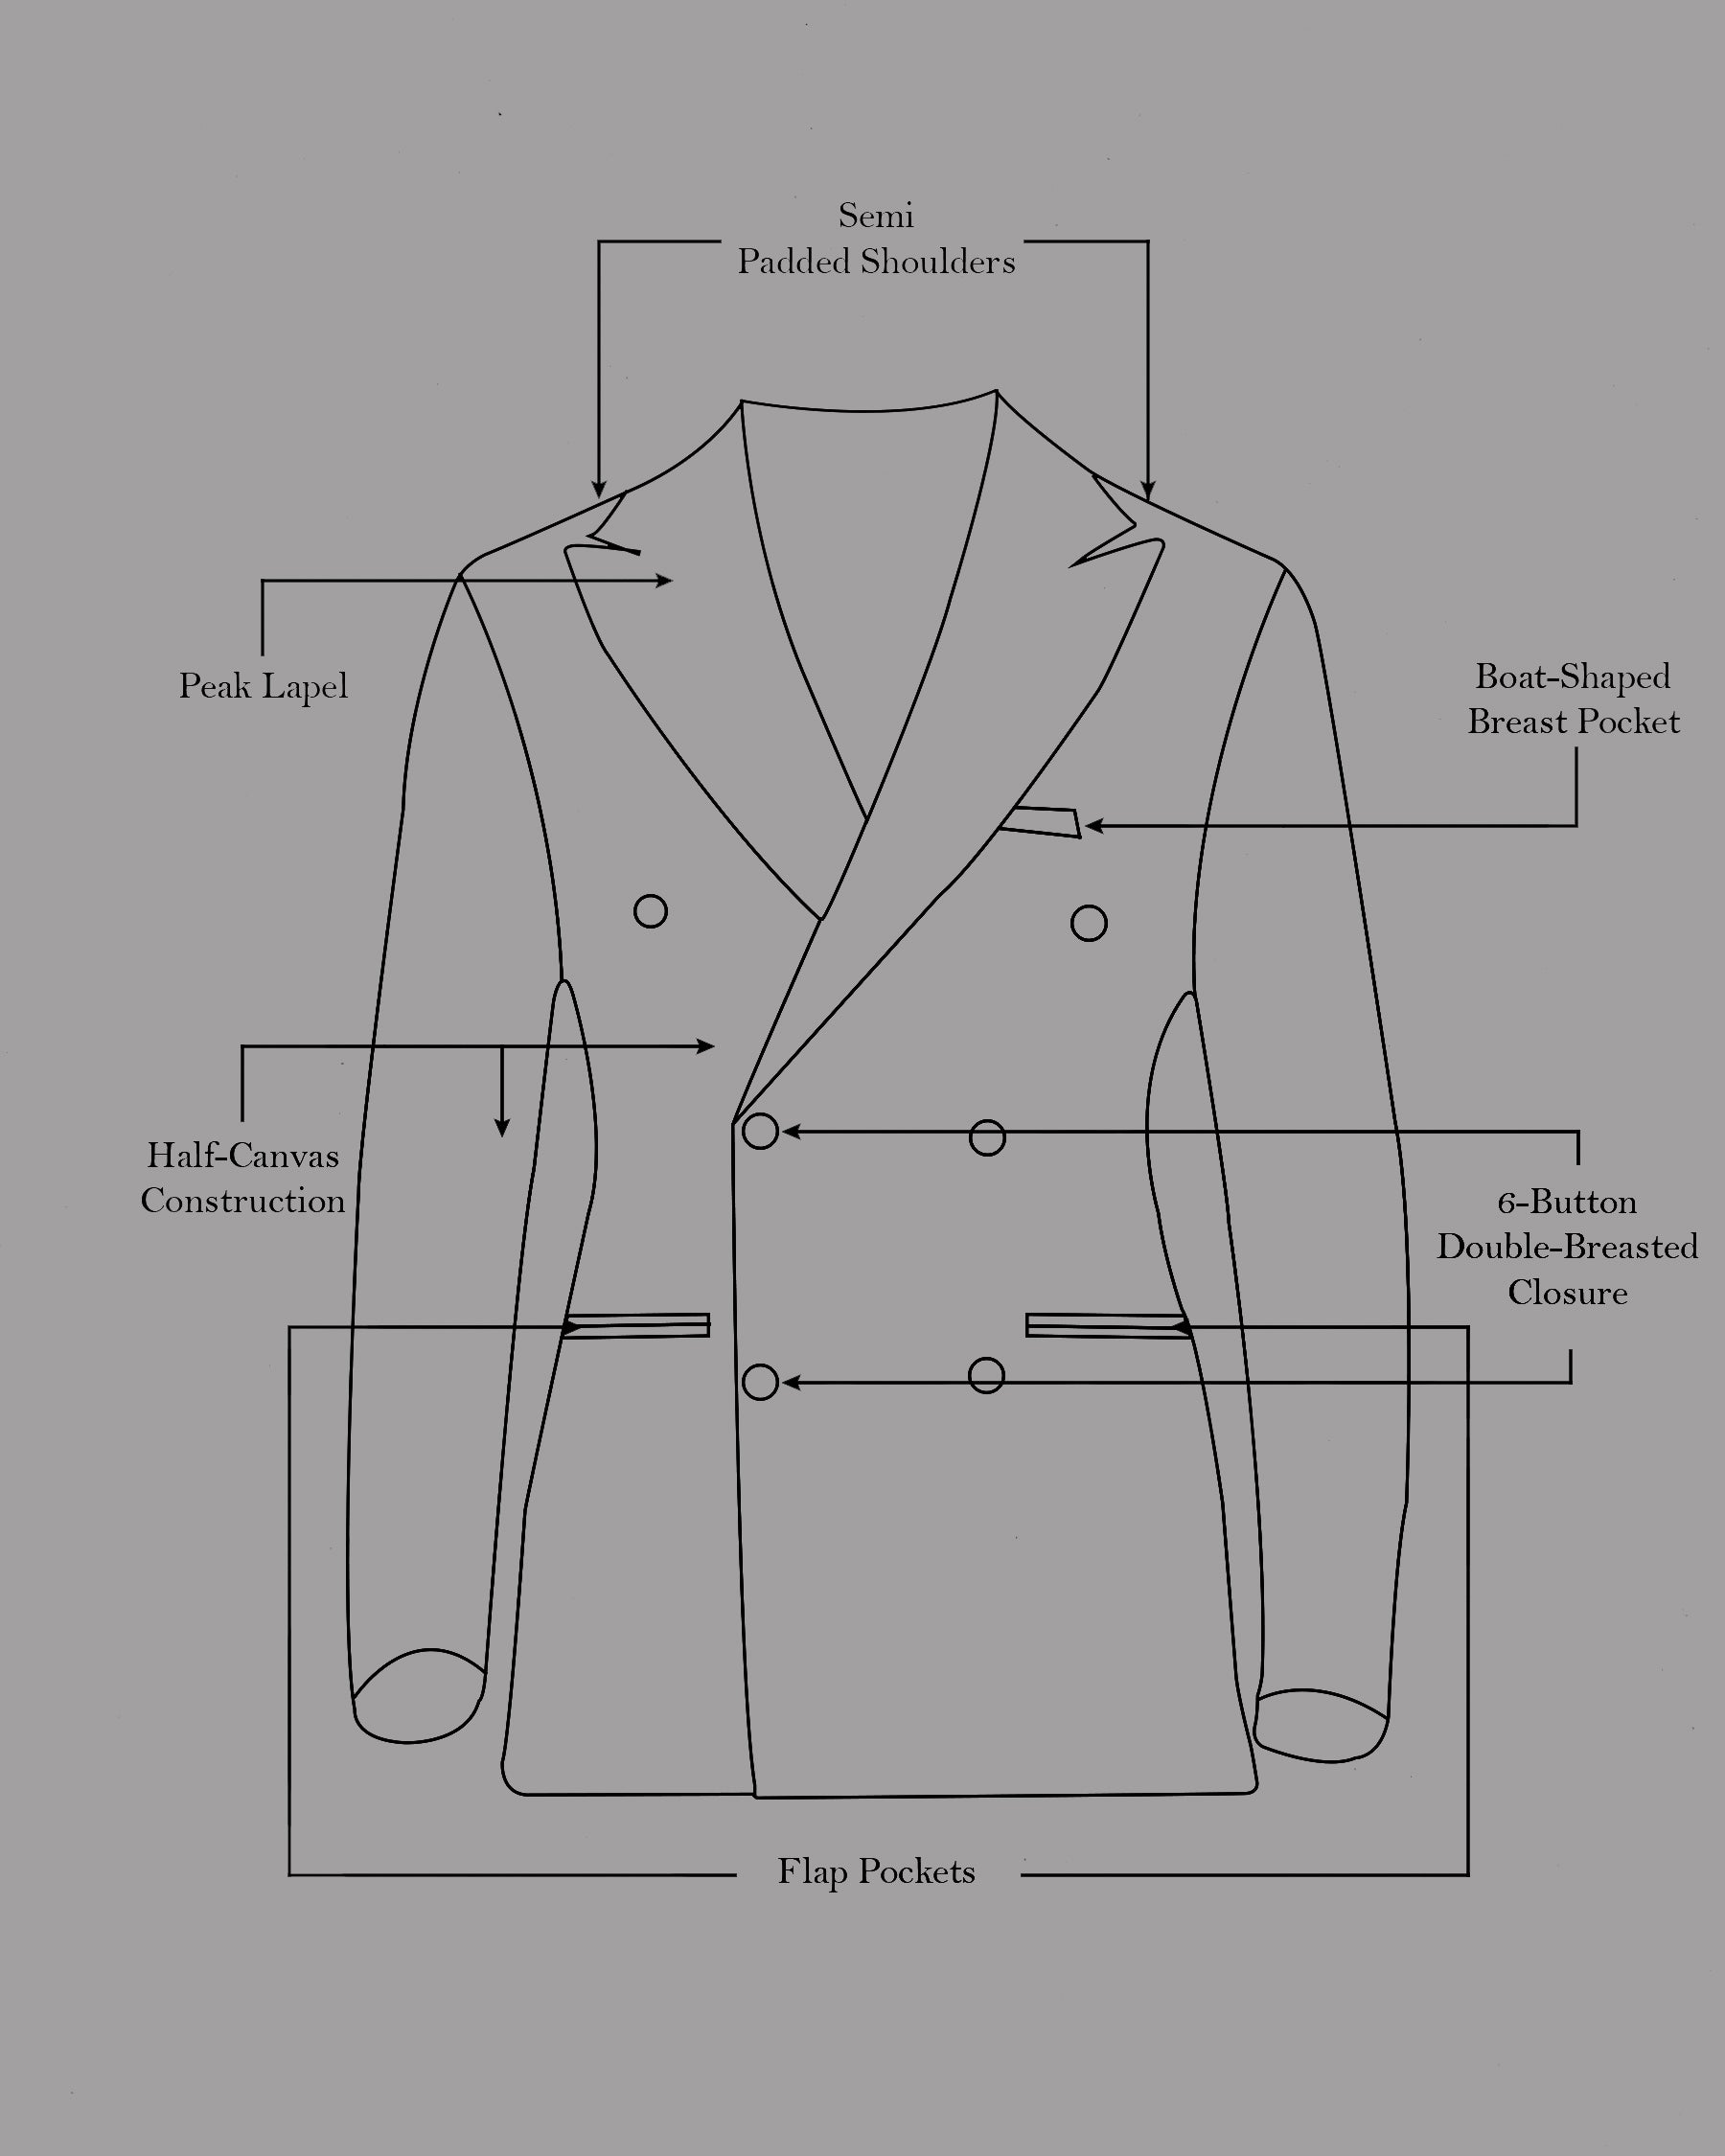 Iridium Gray Double Breasted Suit